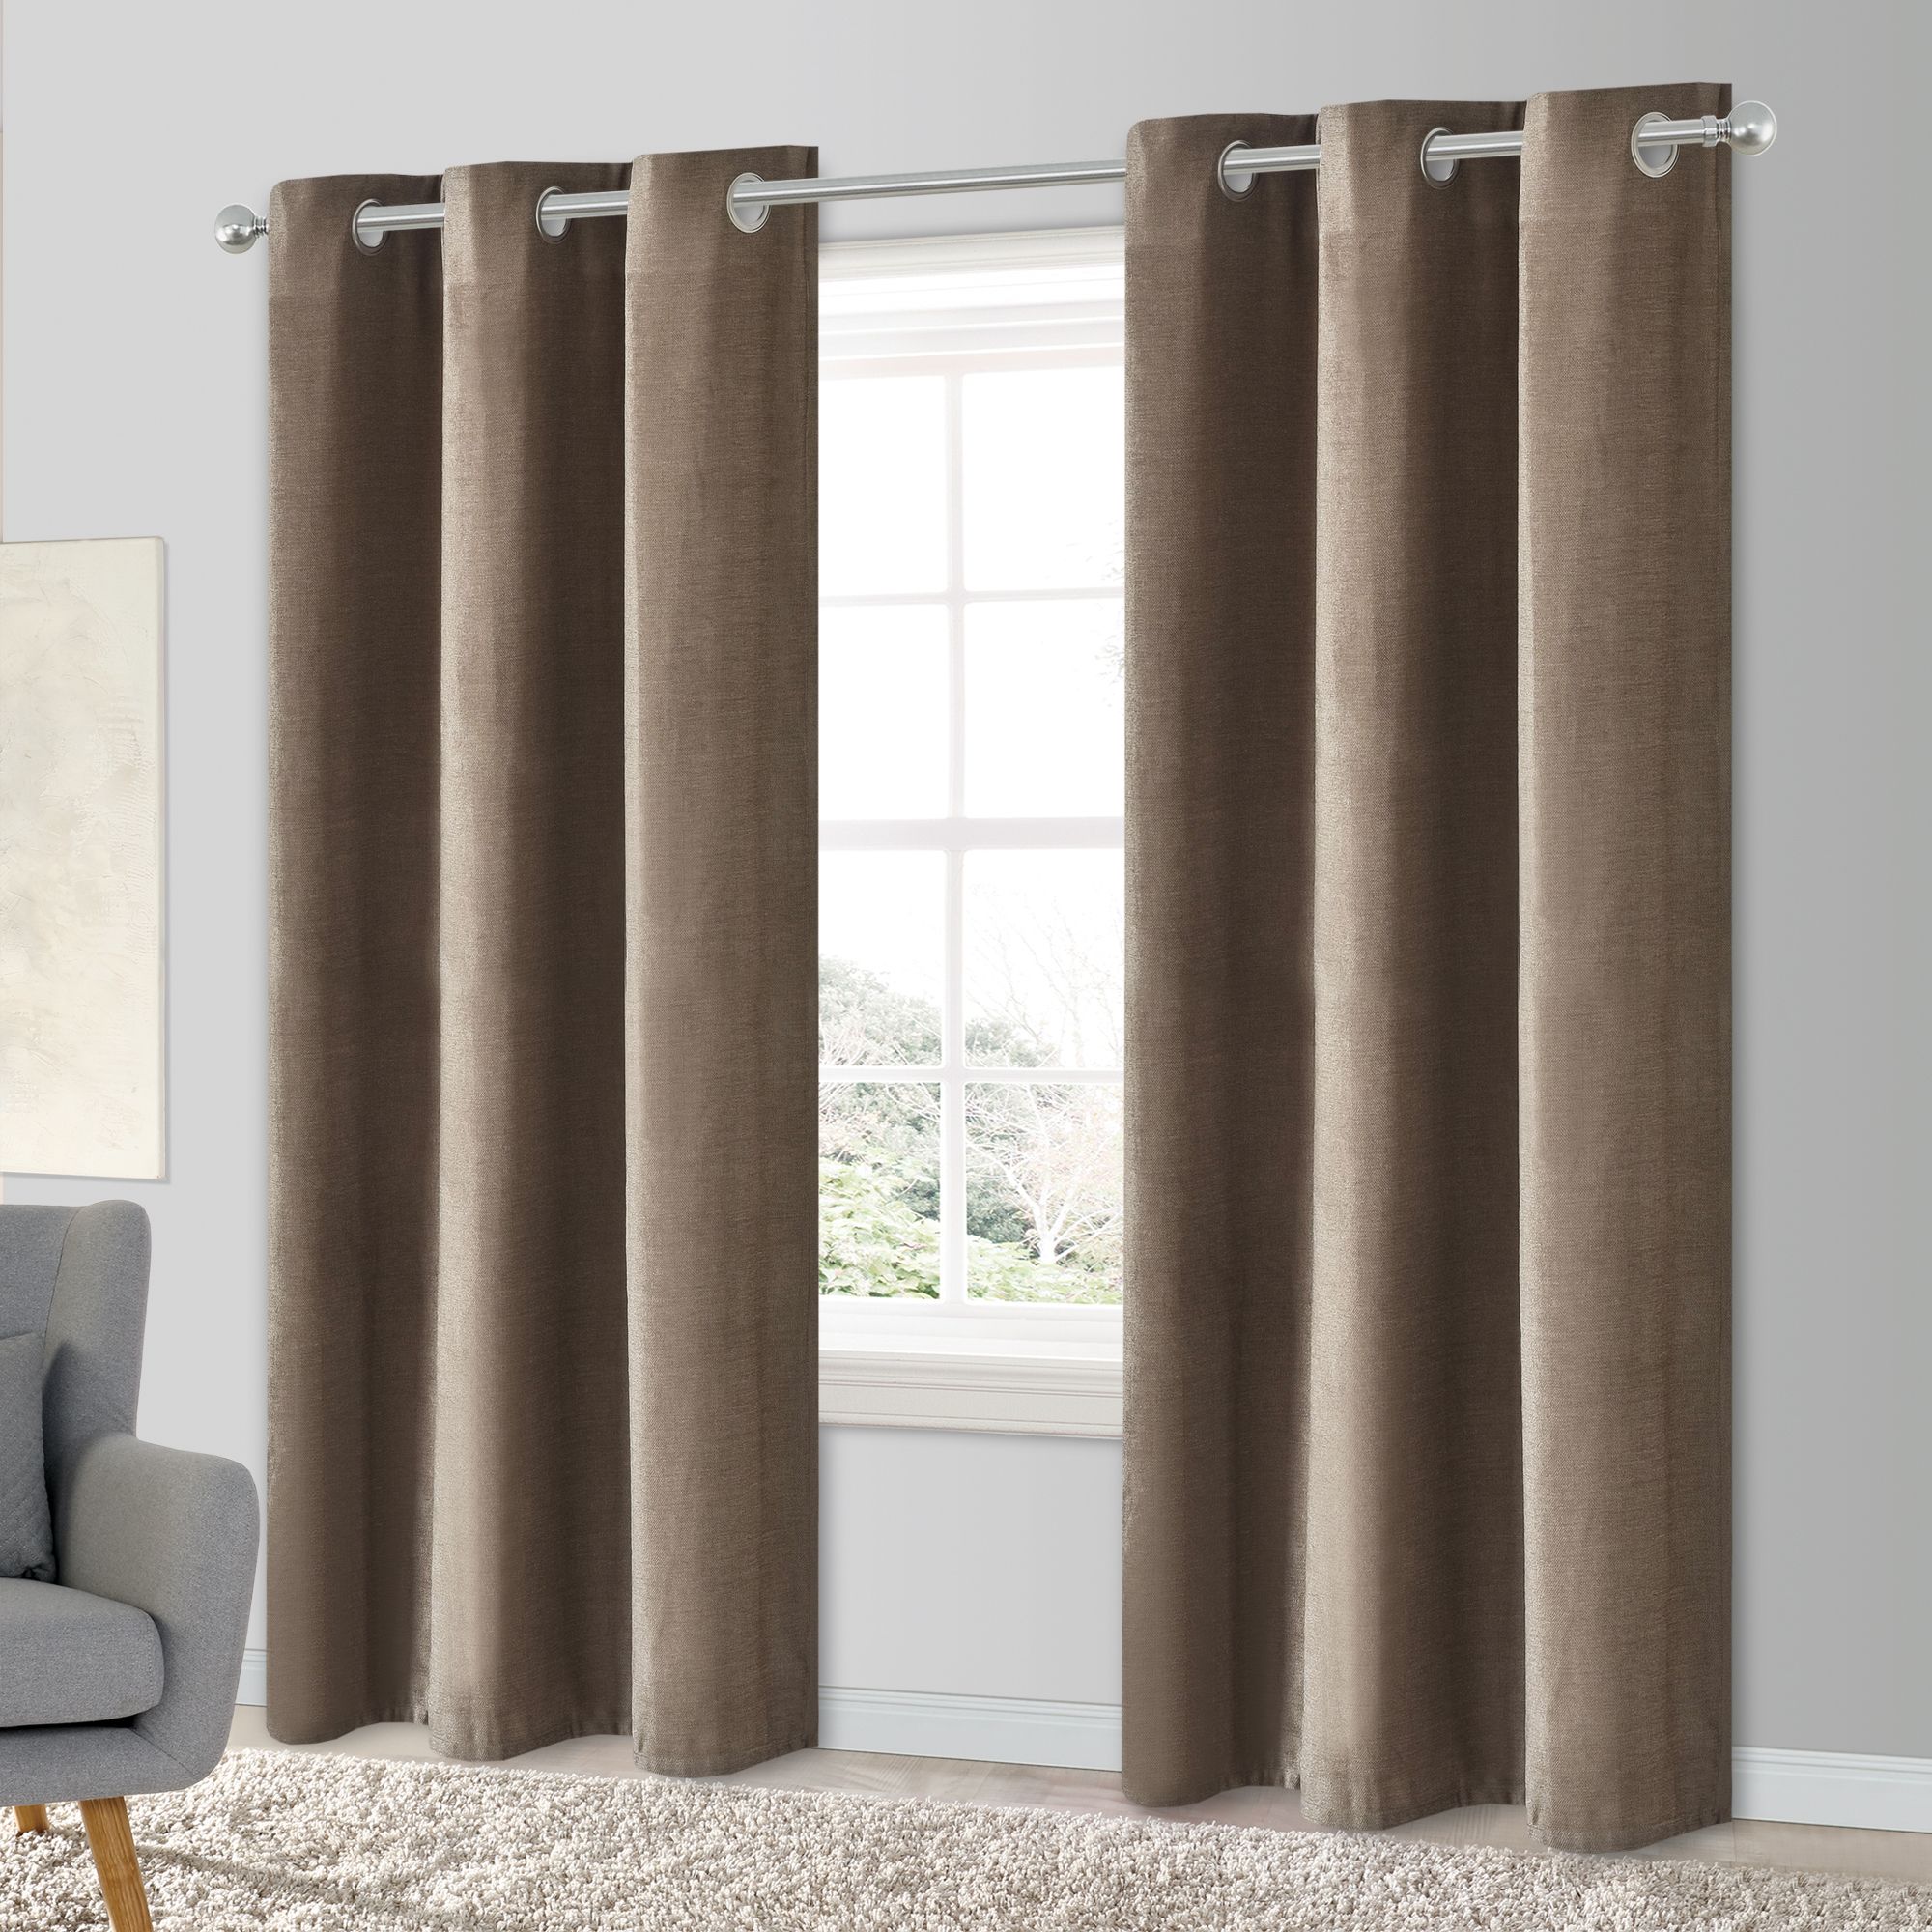 Arntzen Taupe Plain woven Lined Eyelet Curtain (W)117cm (L)137cm, Pair